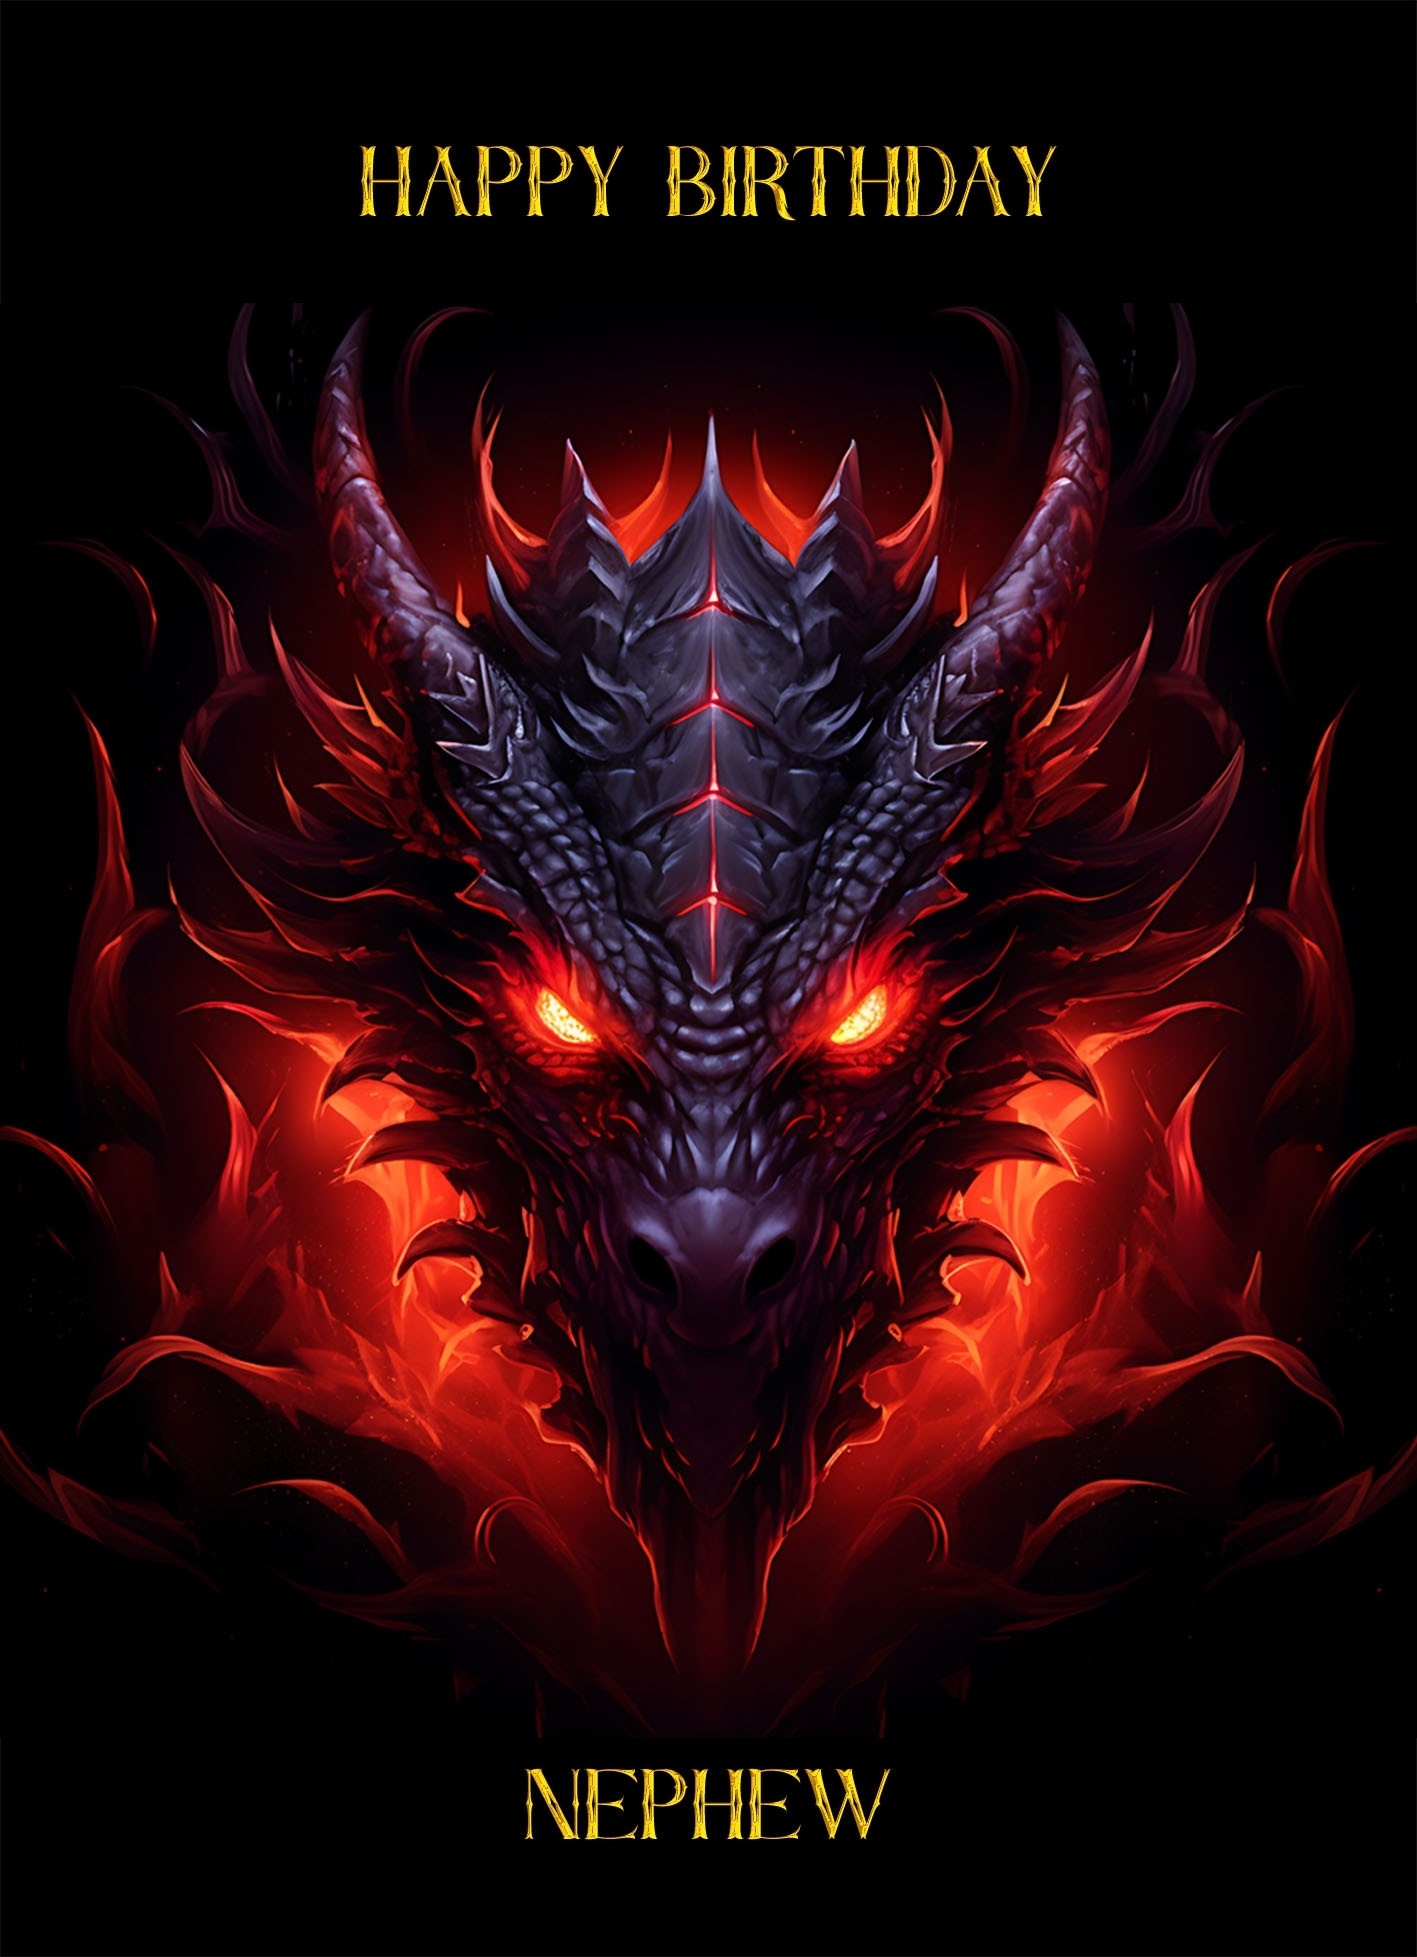 Gothic Fantasy Dragon Birthday Card For Nephew (Design 1)